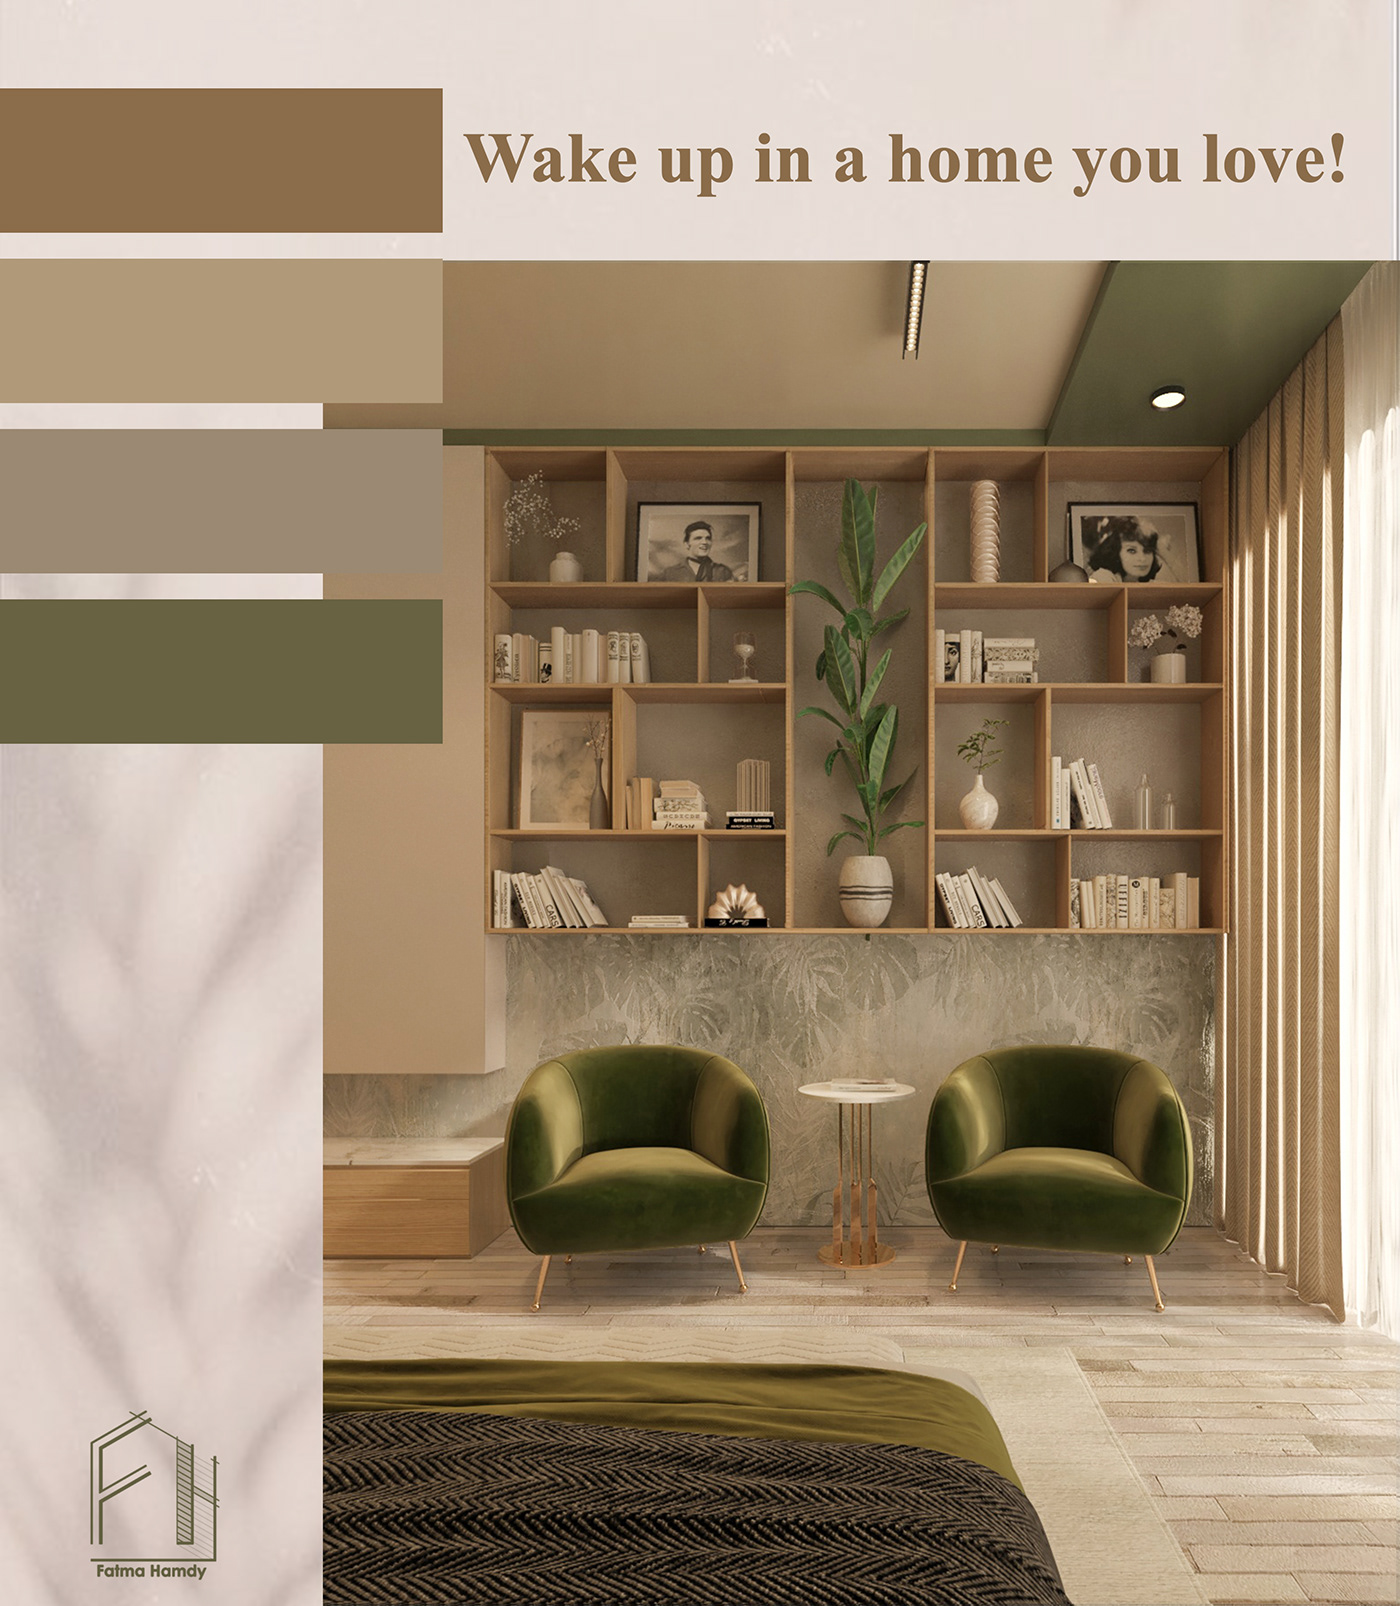 Interior bedroom architecture visualization 3ds max modern Render architectural design architect